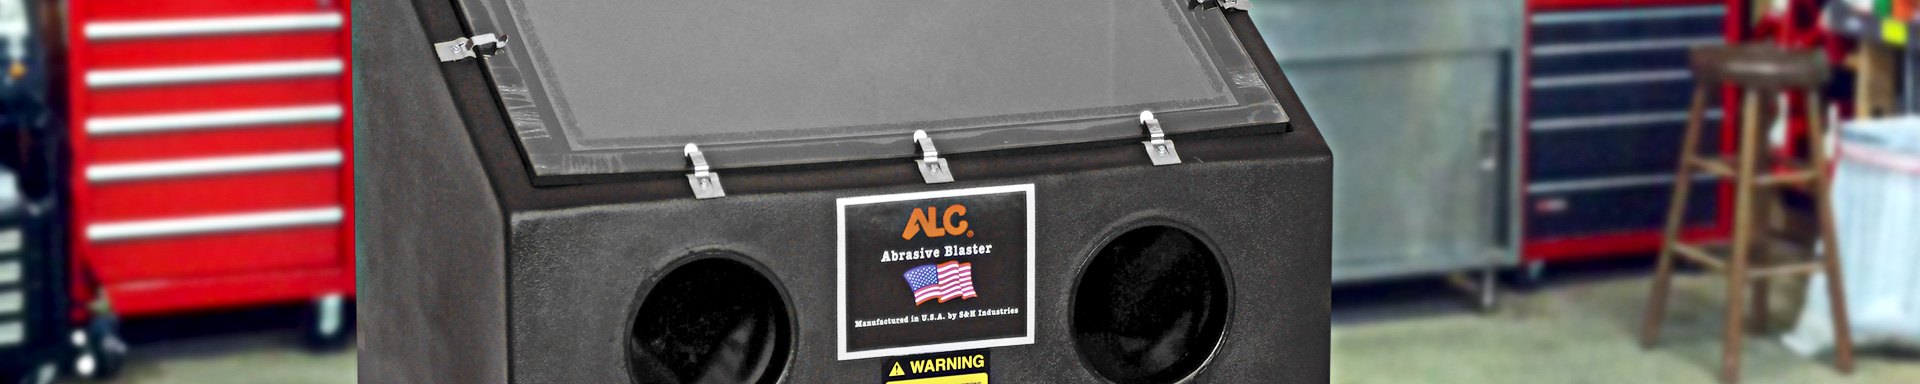 ALC Abrasive Blasting